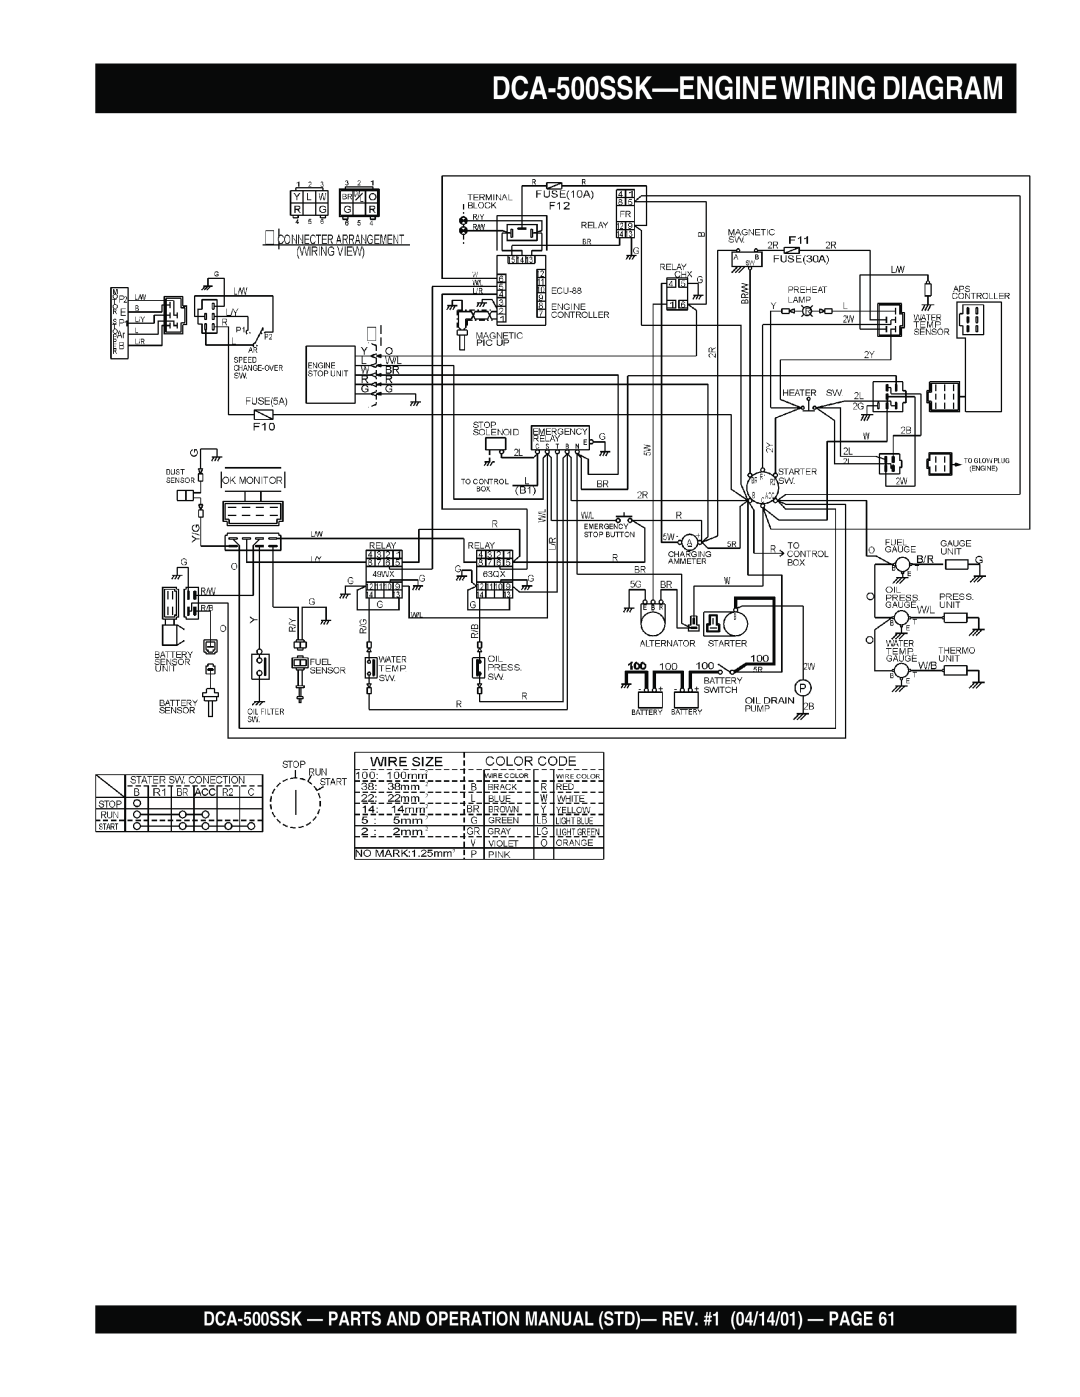 Multiquip DCA-500SSK-ENGINEWIRING DIAGRAM, DCA-500SSK - PARTS AND OPERATION MANUAL STD- REV. #1 04/14/01 - PAGE 